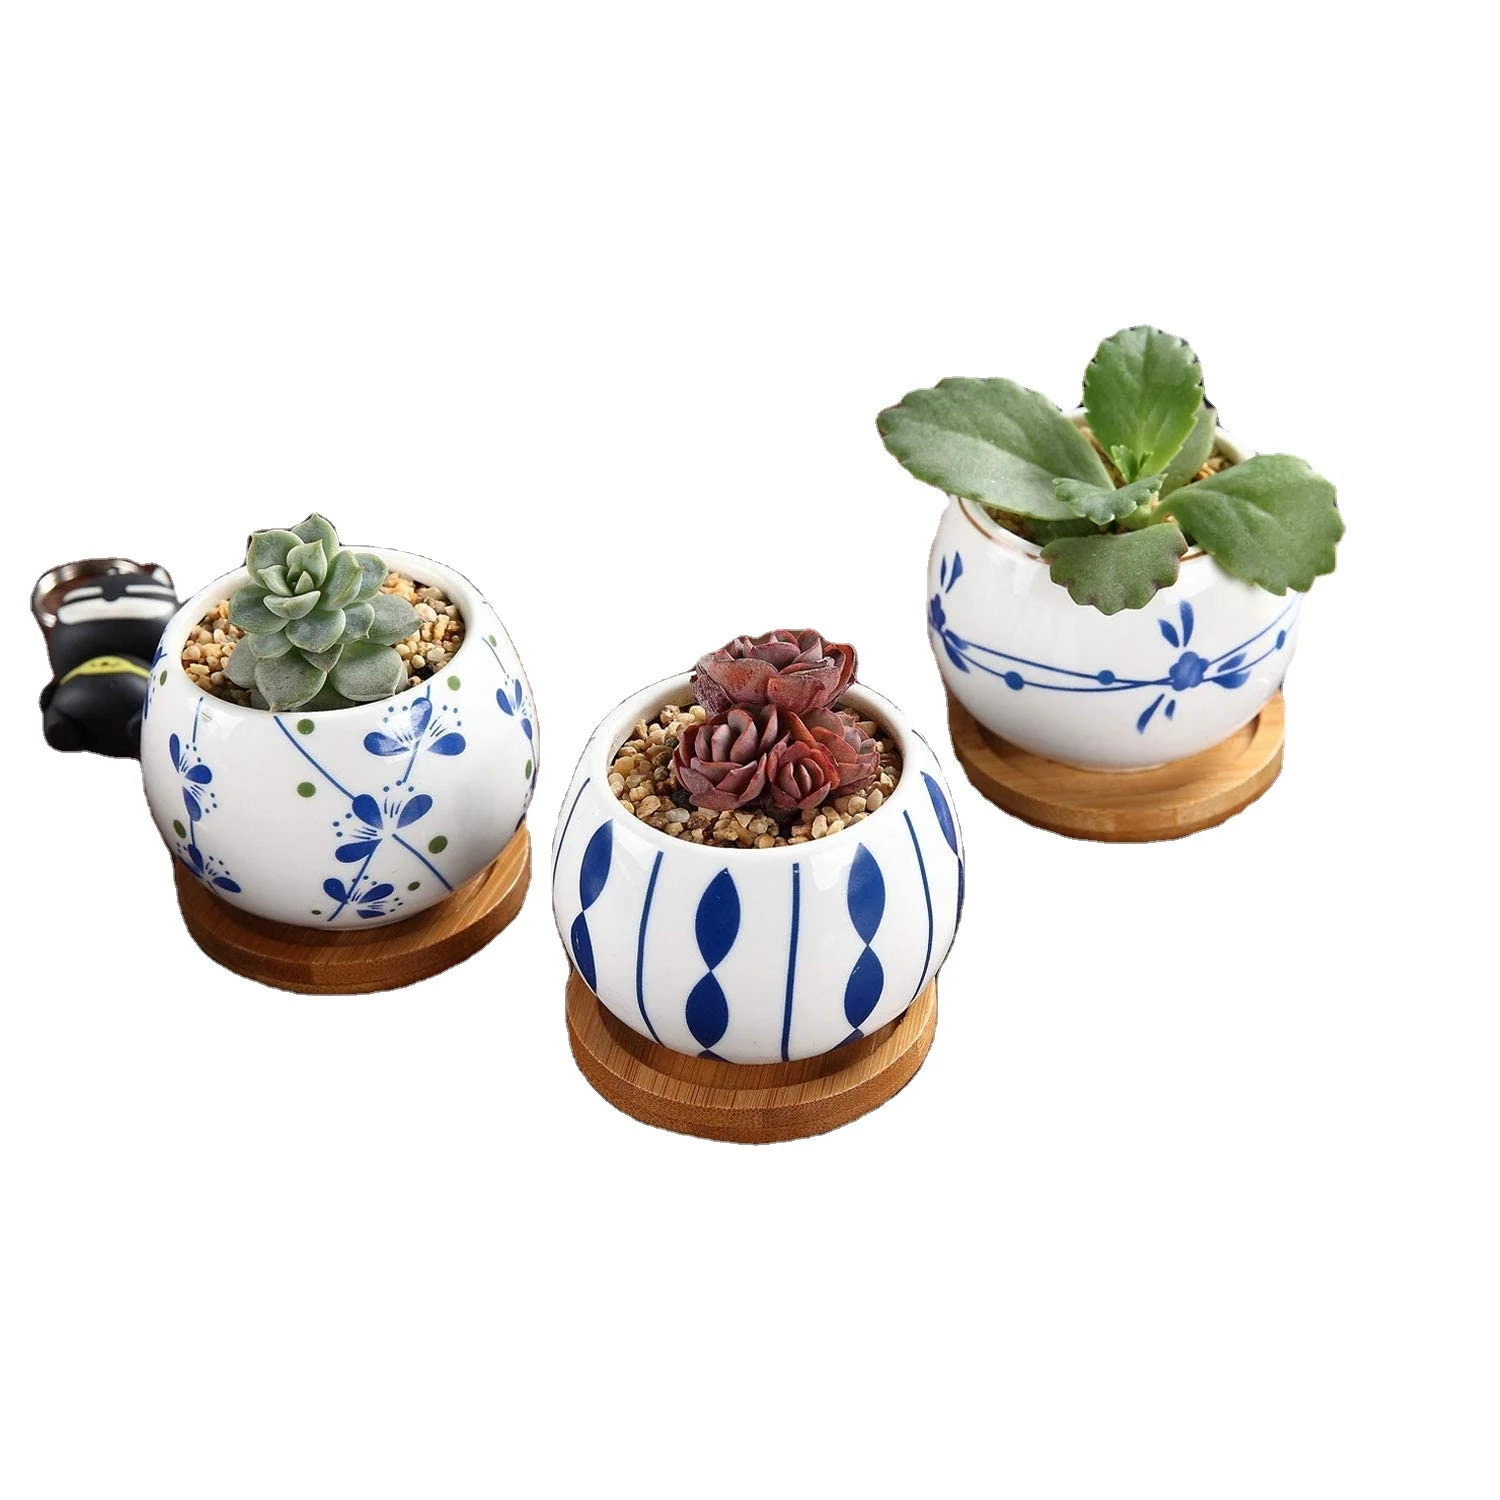 2.5 Inch Ceramic Succulent Planter Pot with Bamboo Saucer Set of 3 